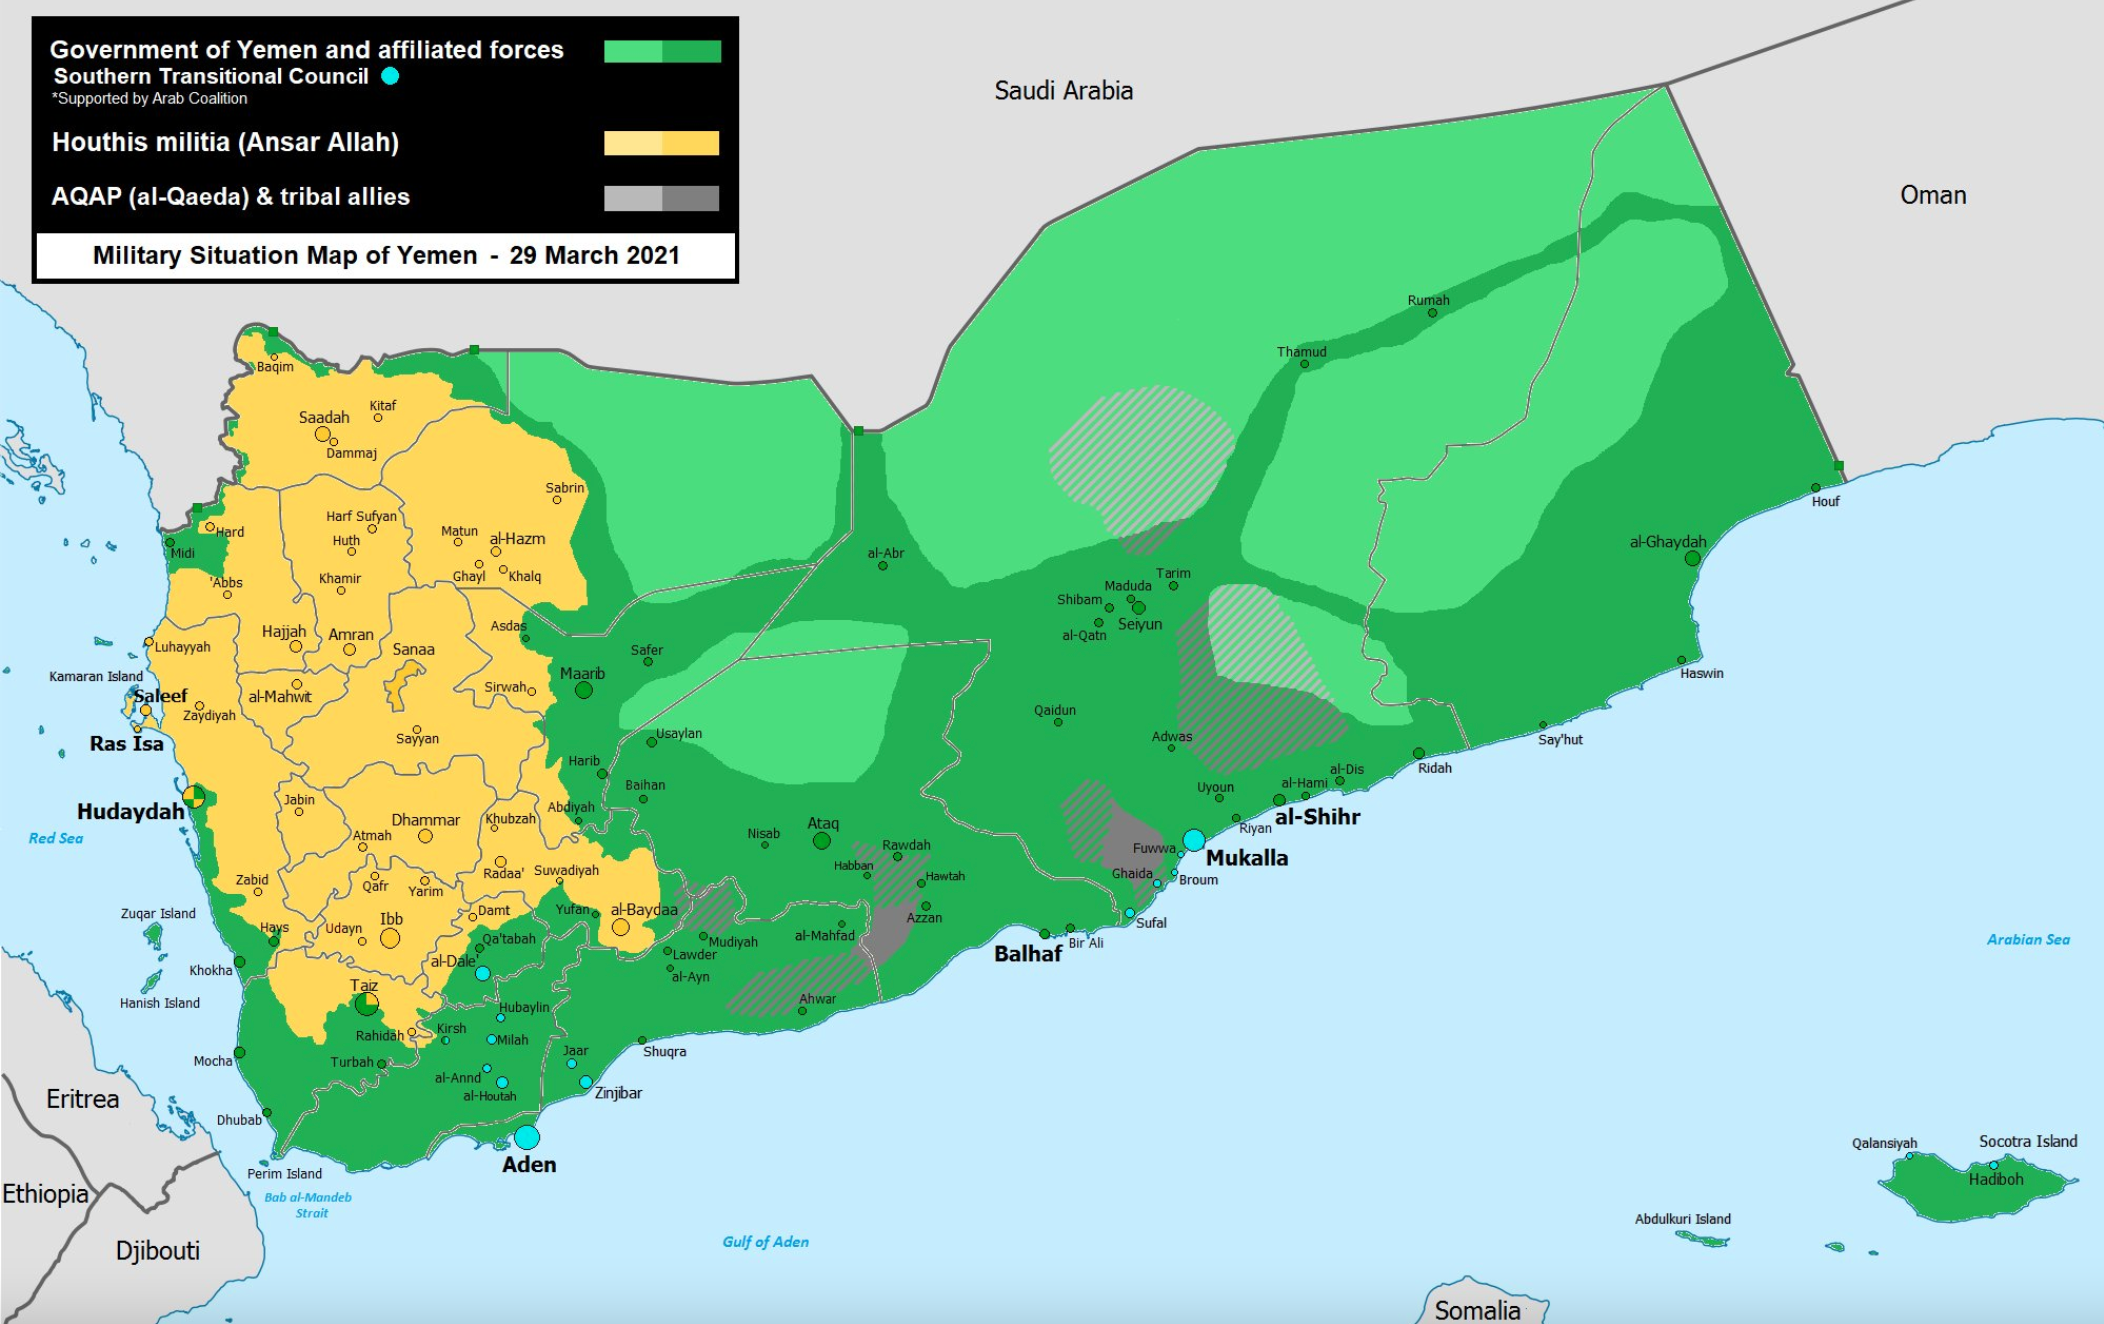 yemen travel advisory canada